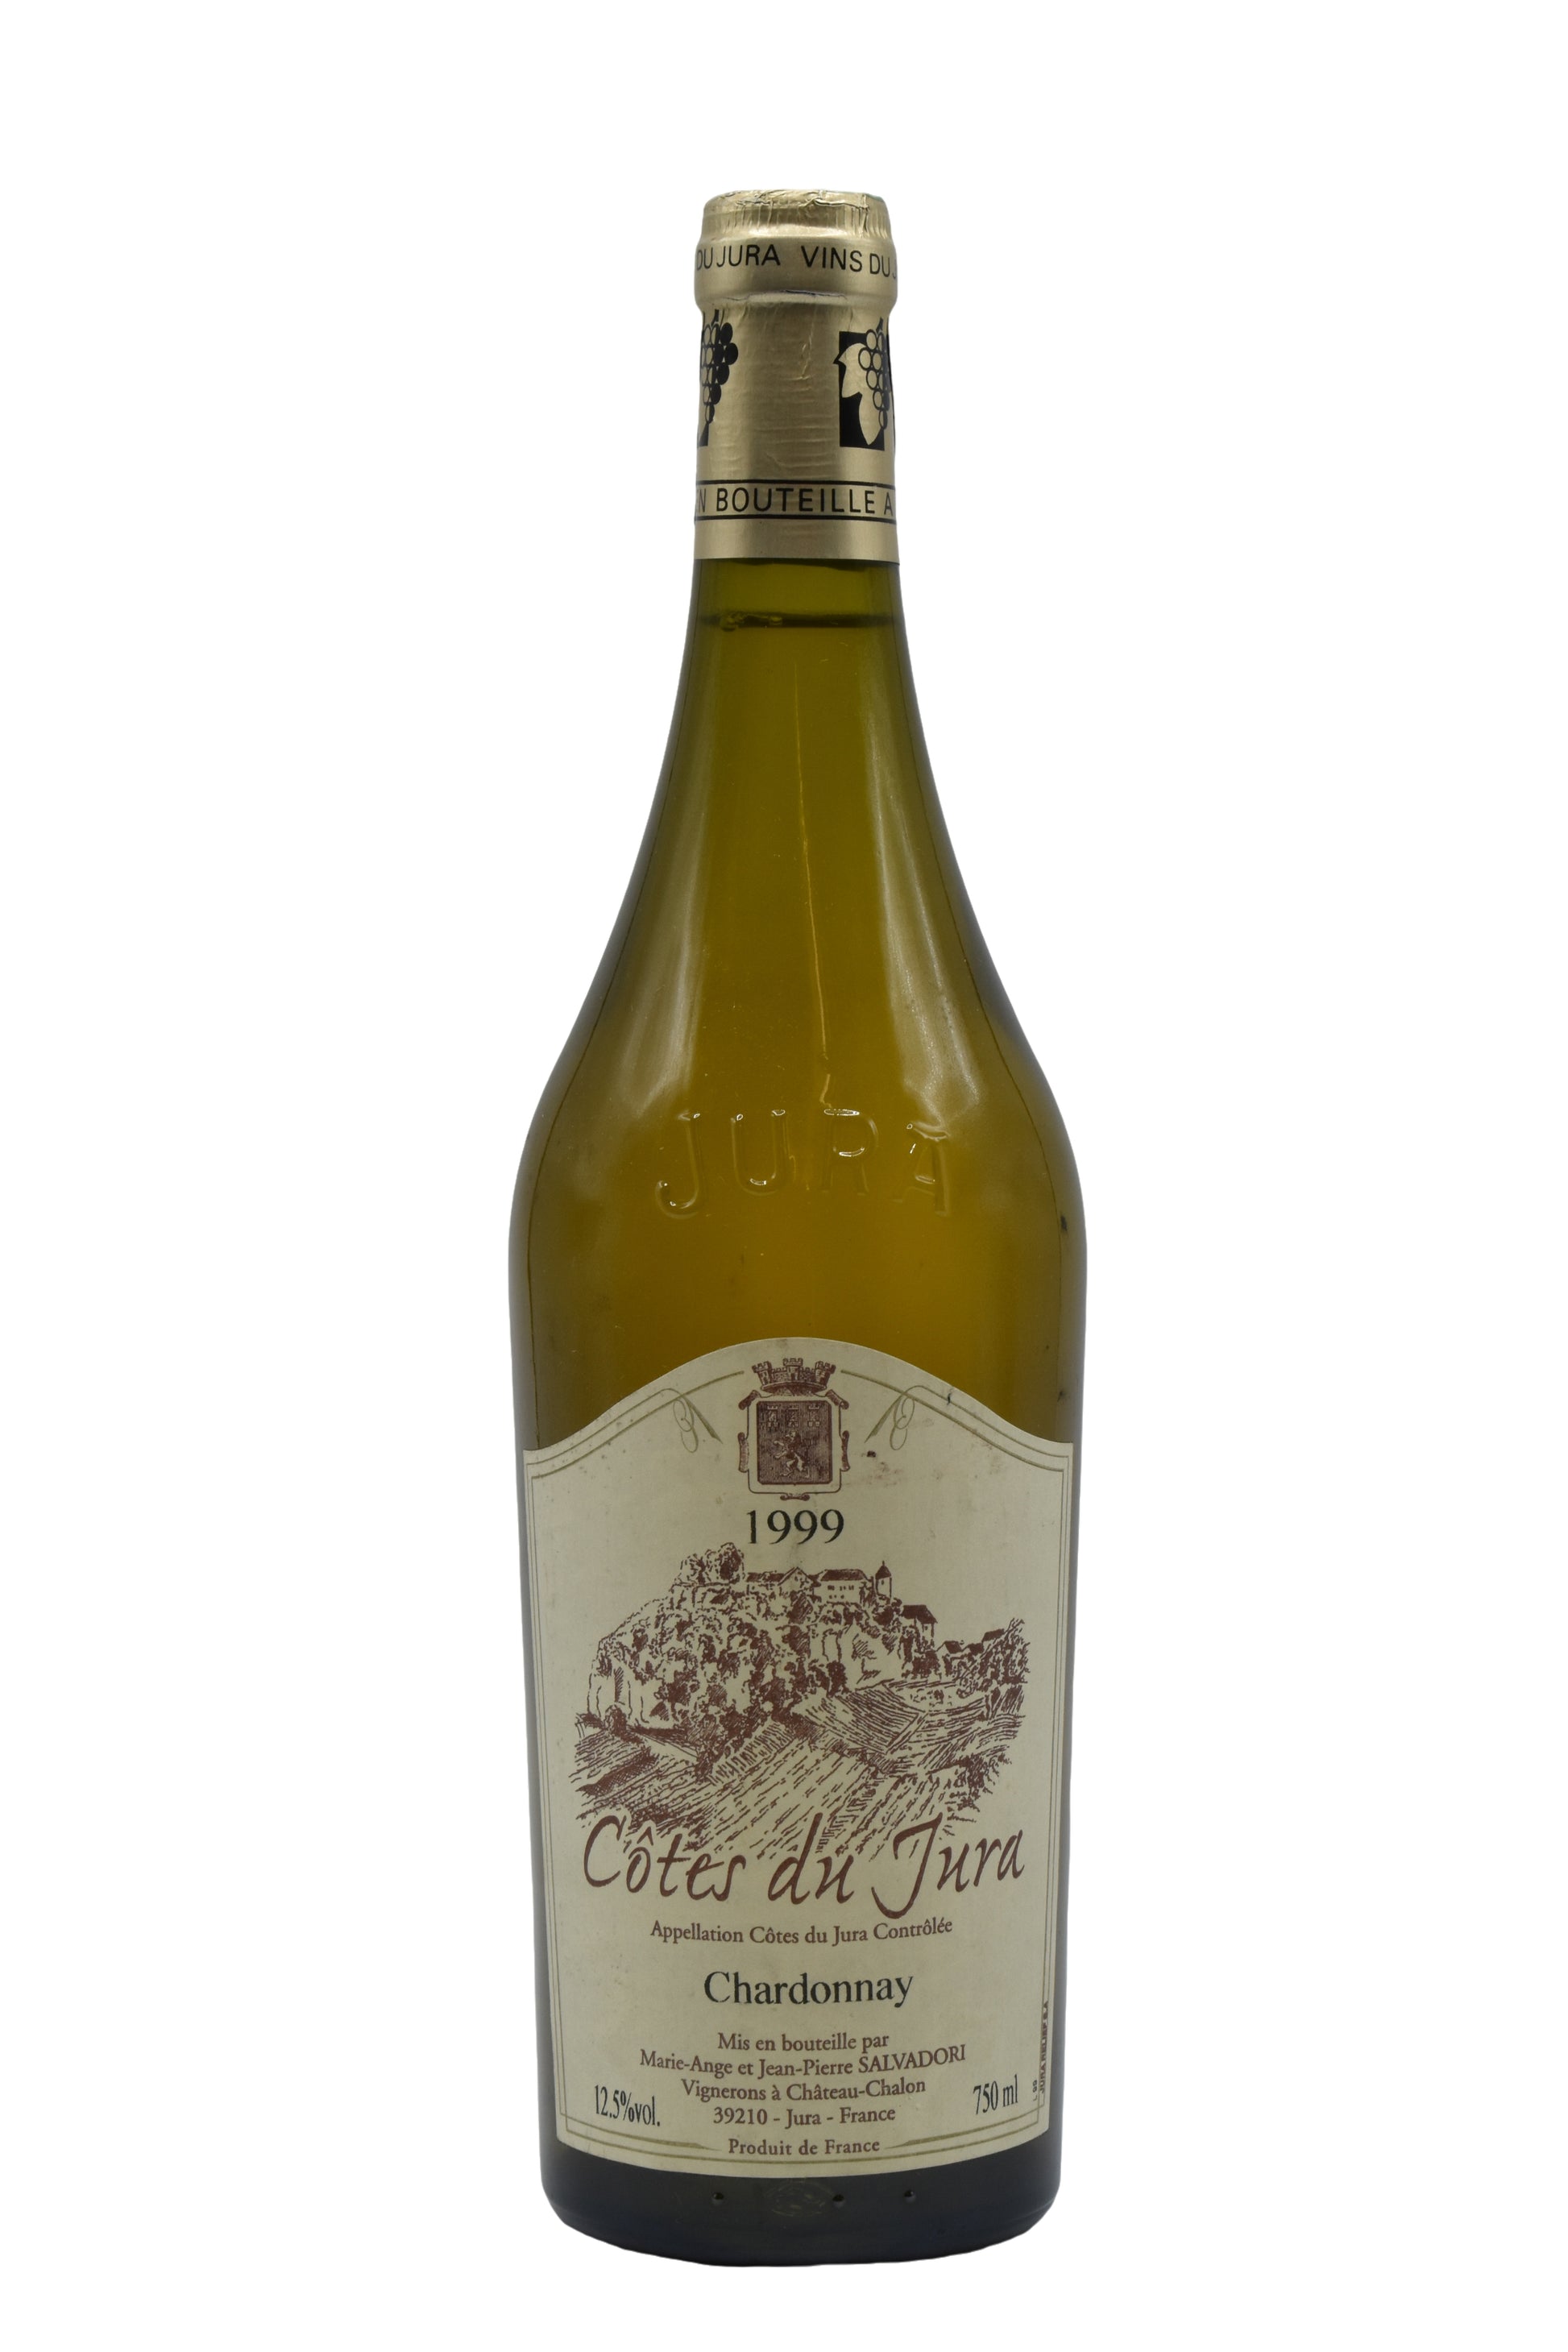 1999 Salvadori, Cotes du Jura Chardonnay 650ml - Walker Wine Co.